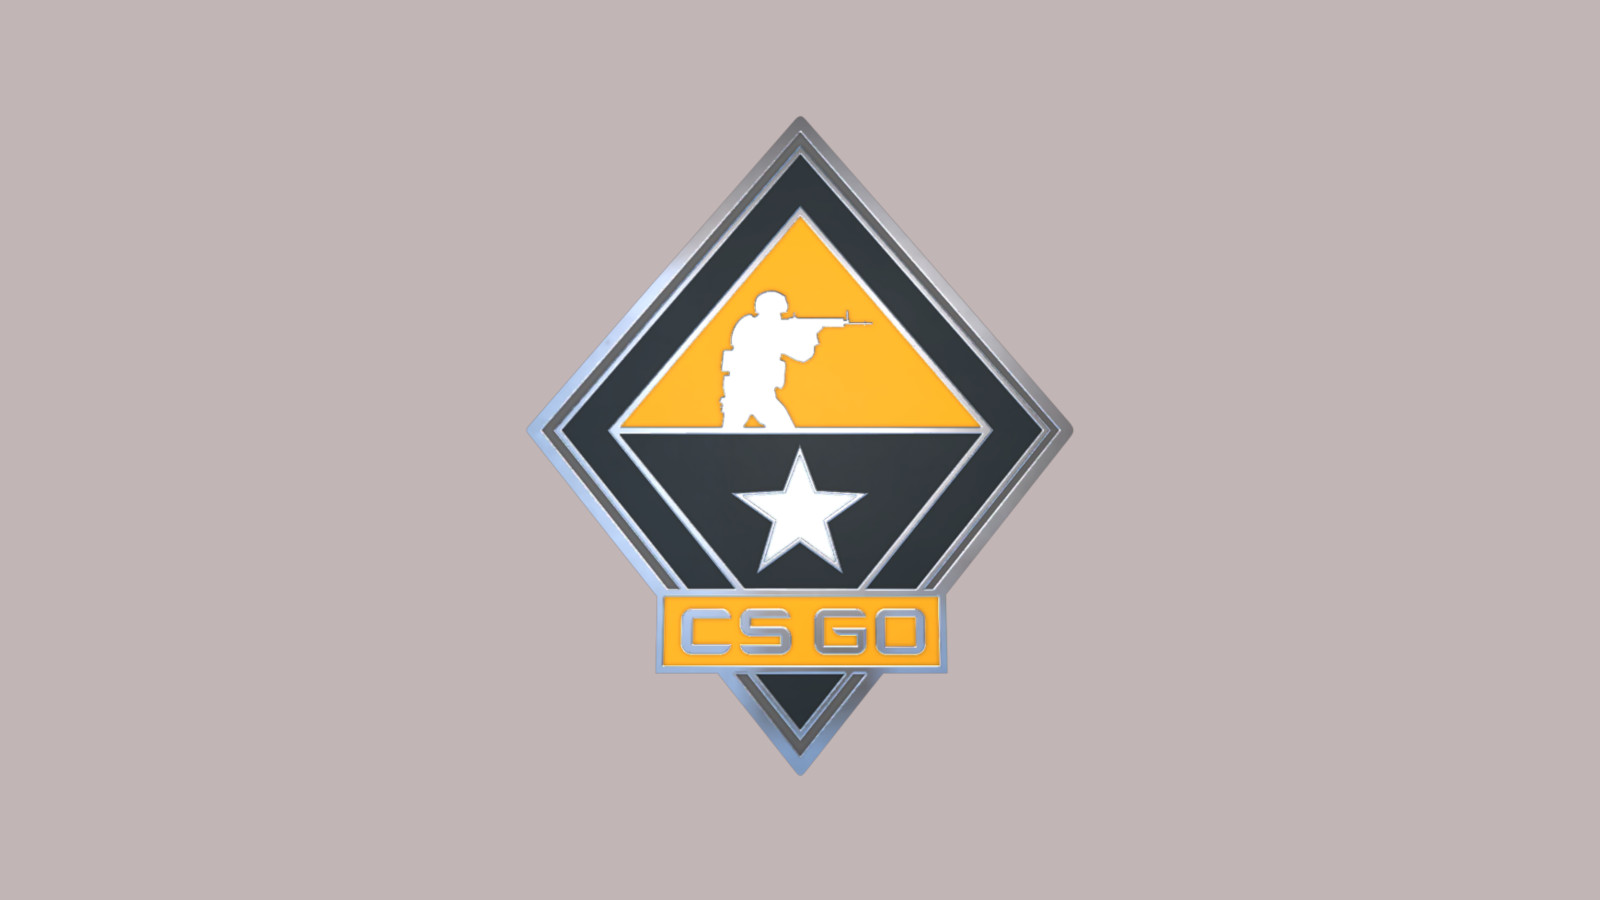 CS:GO - Series 1 - Tactics Collectible Pin, 395.47 usd